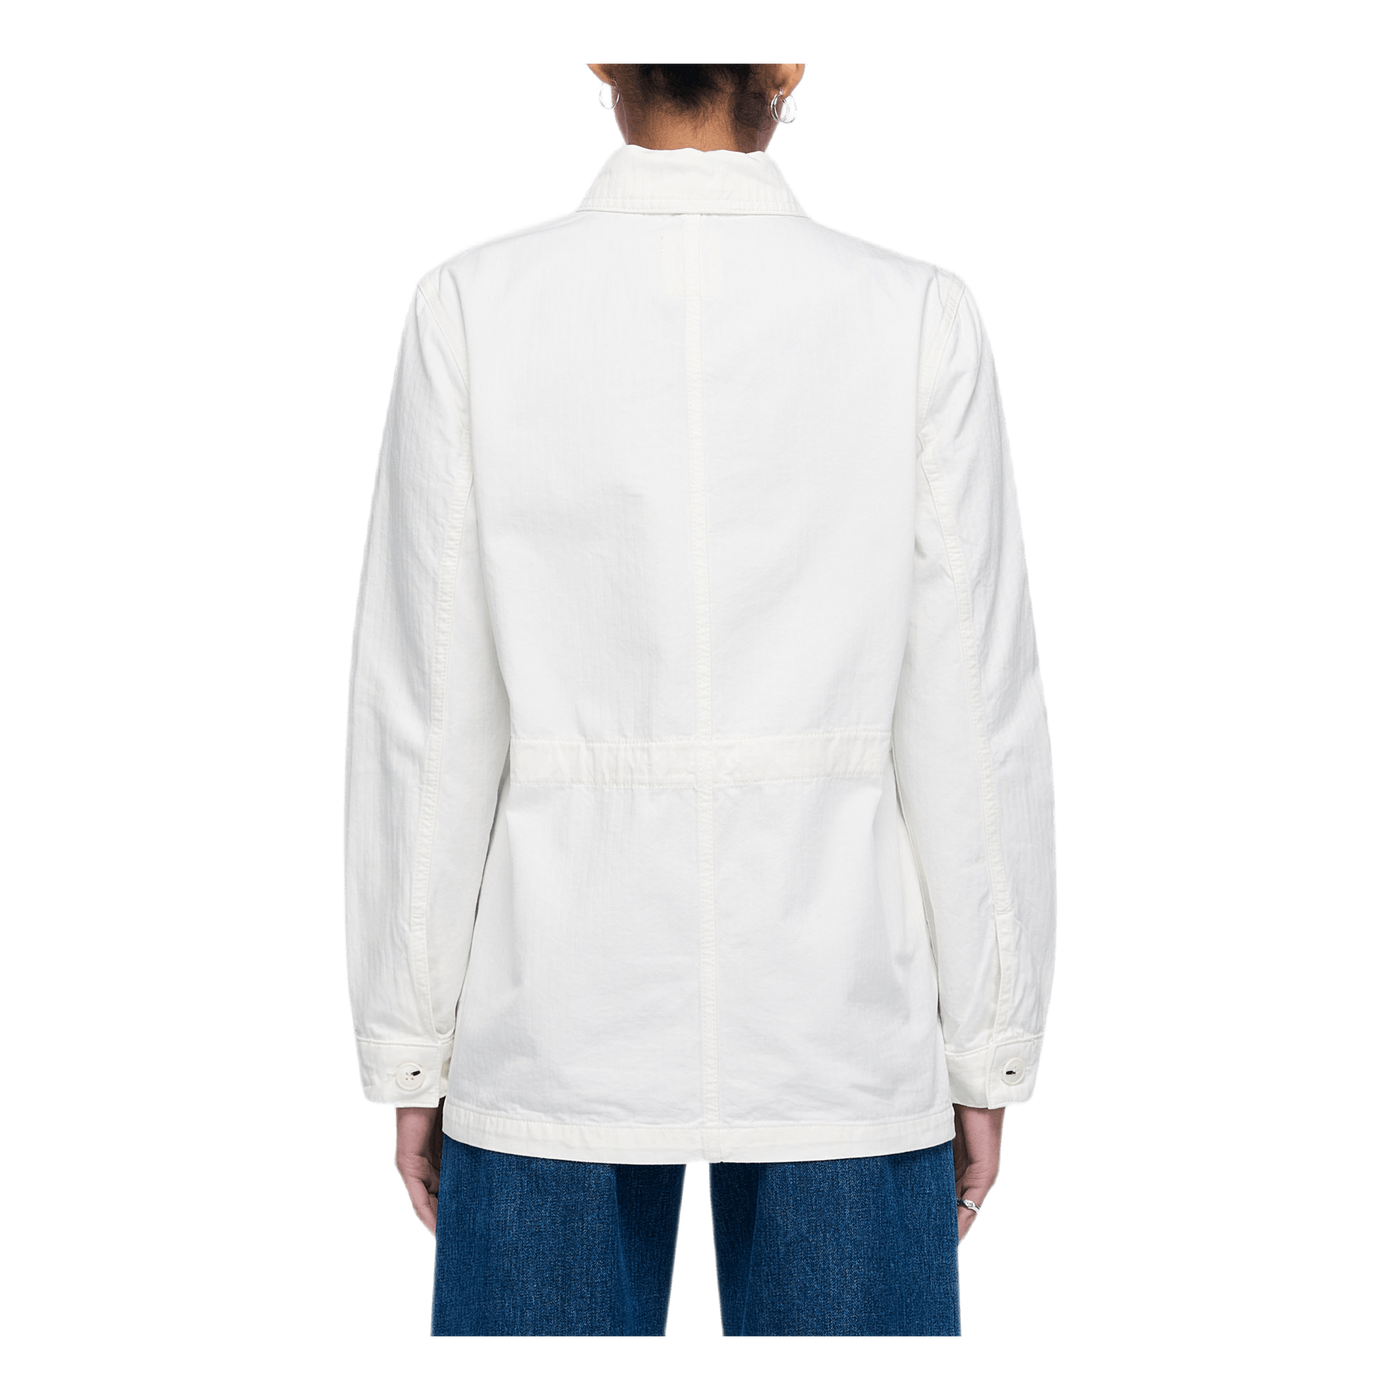 Gretchen Jacket White